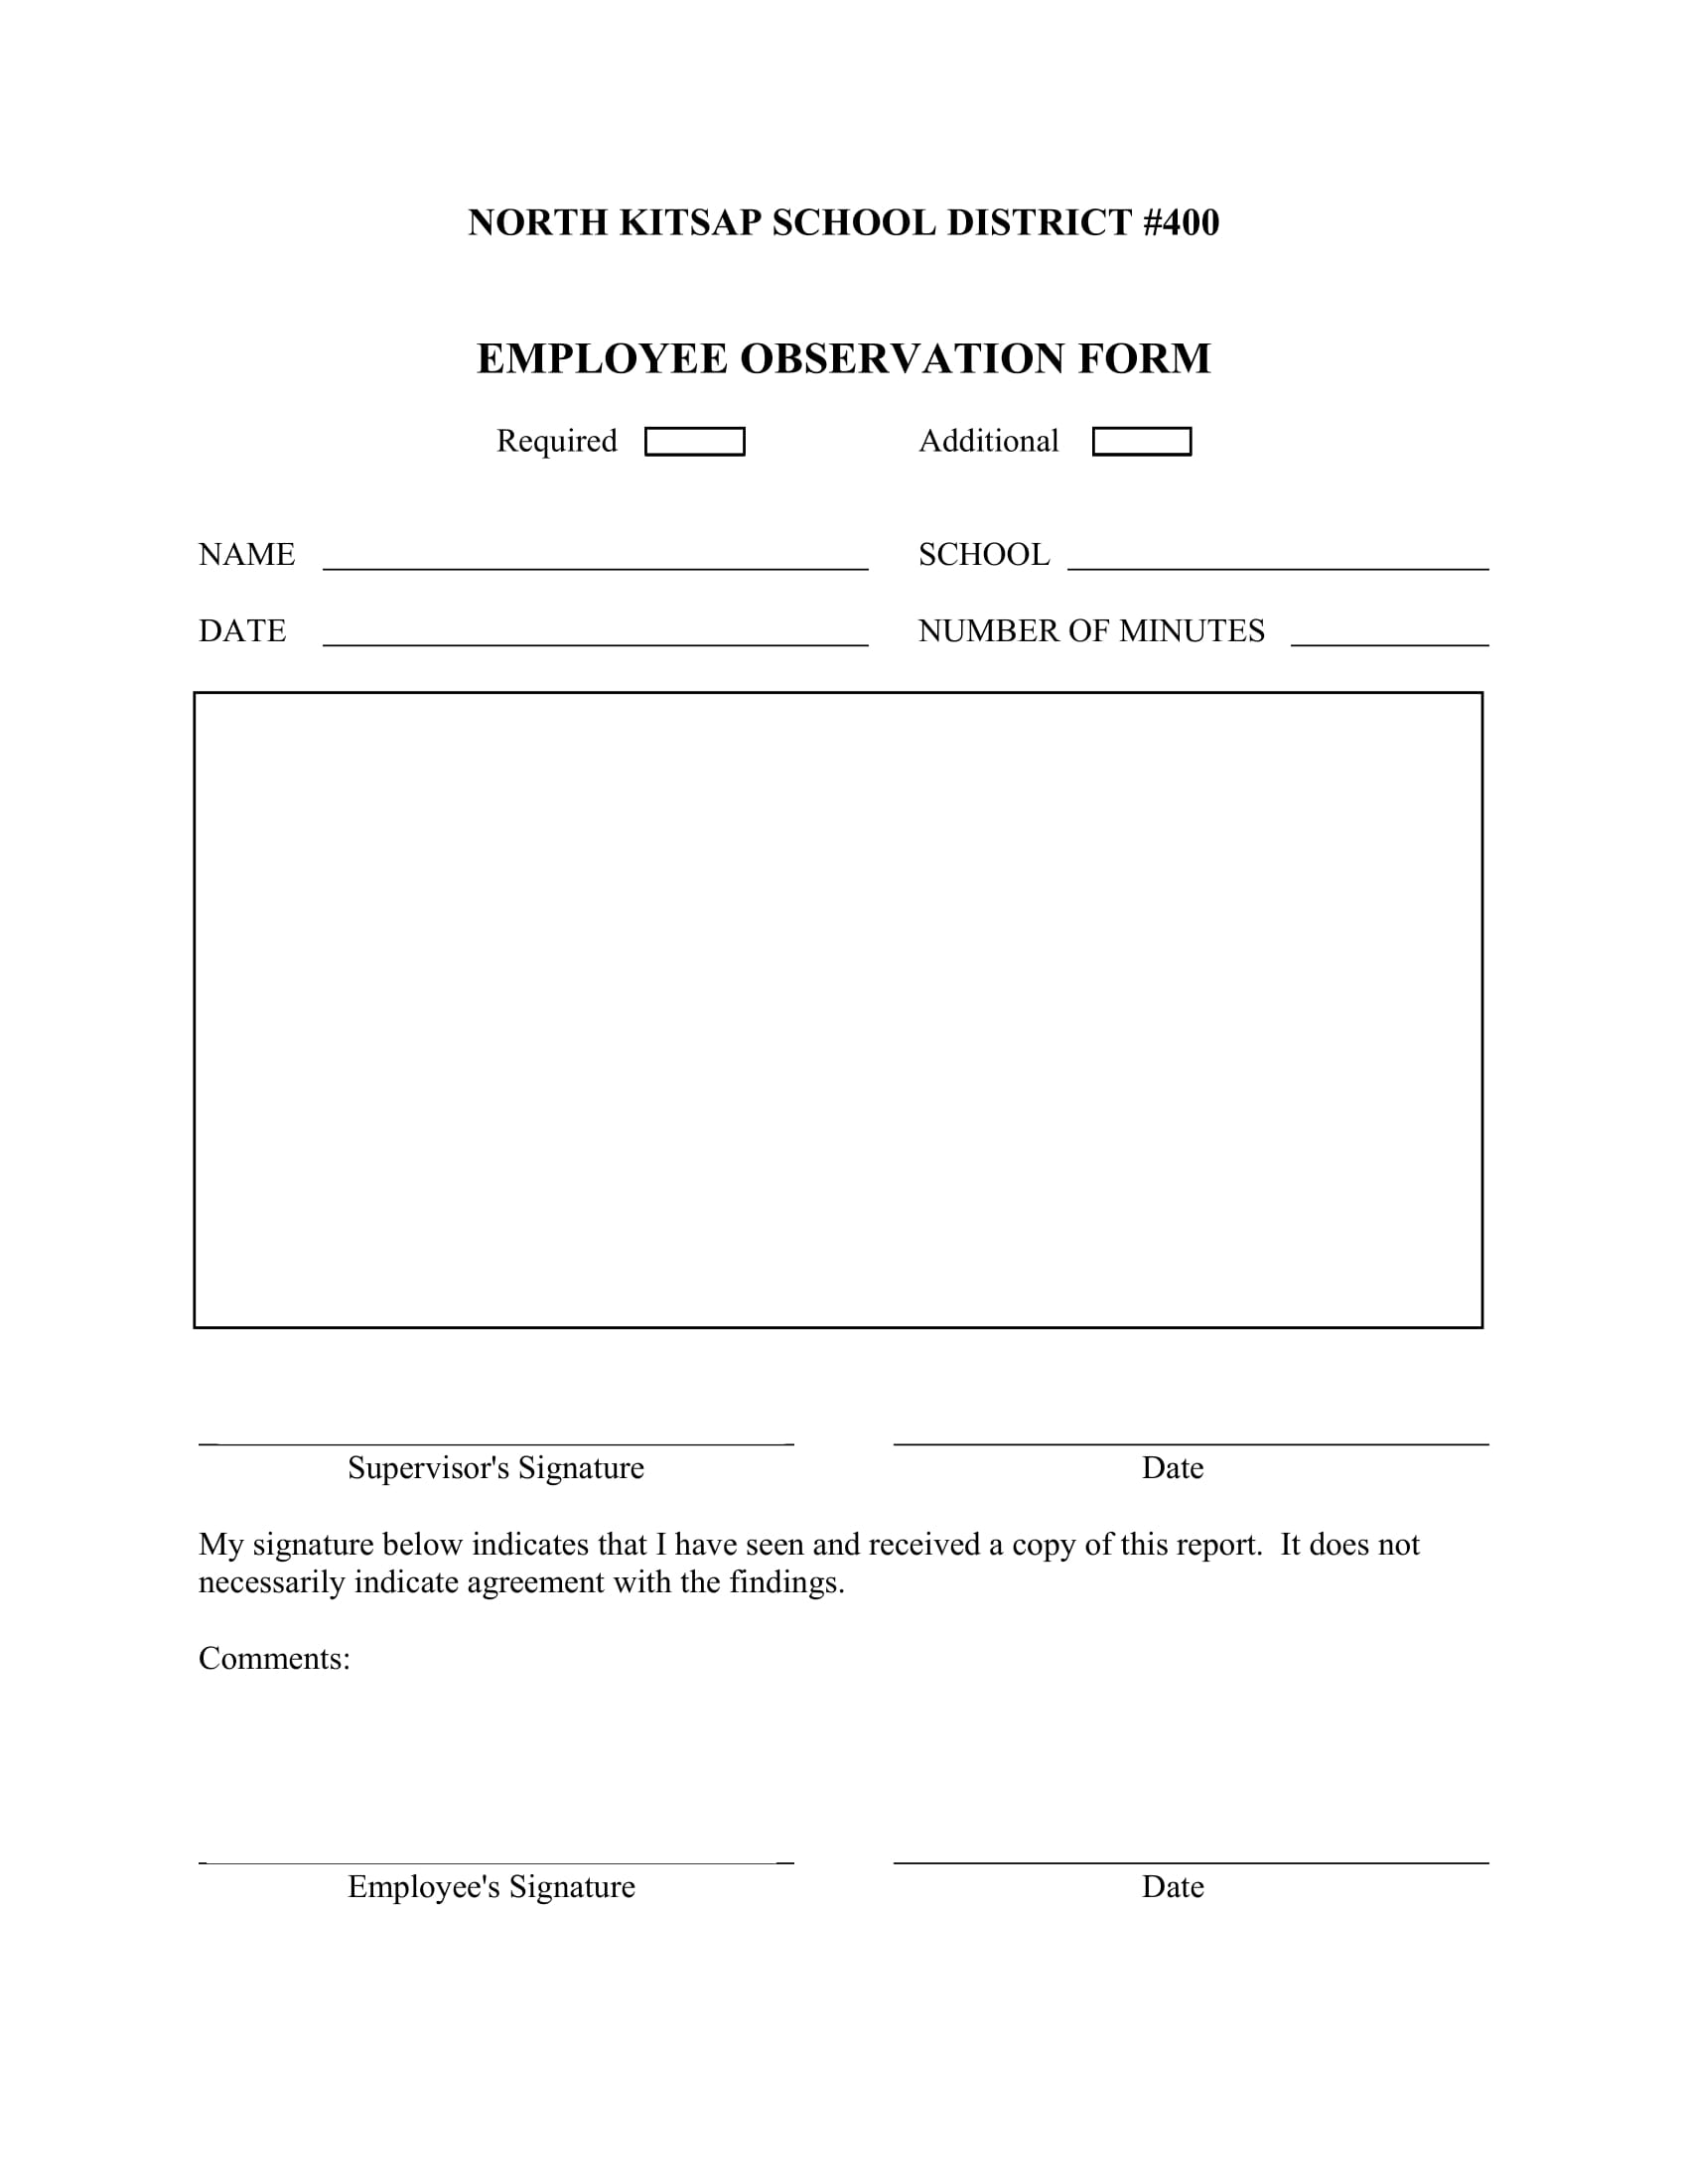 school employee observation form 1